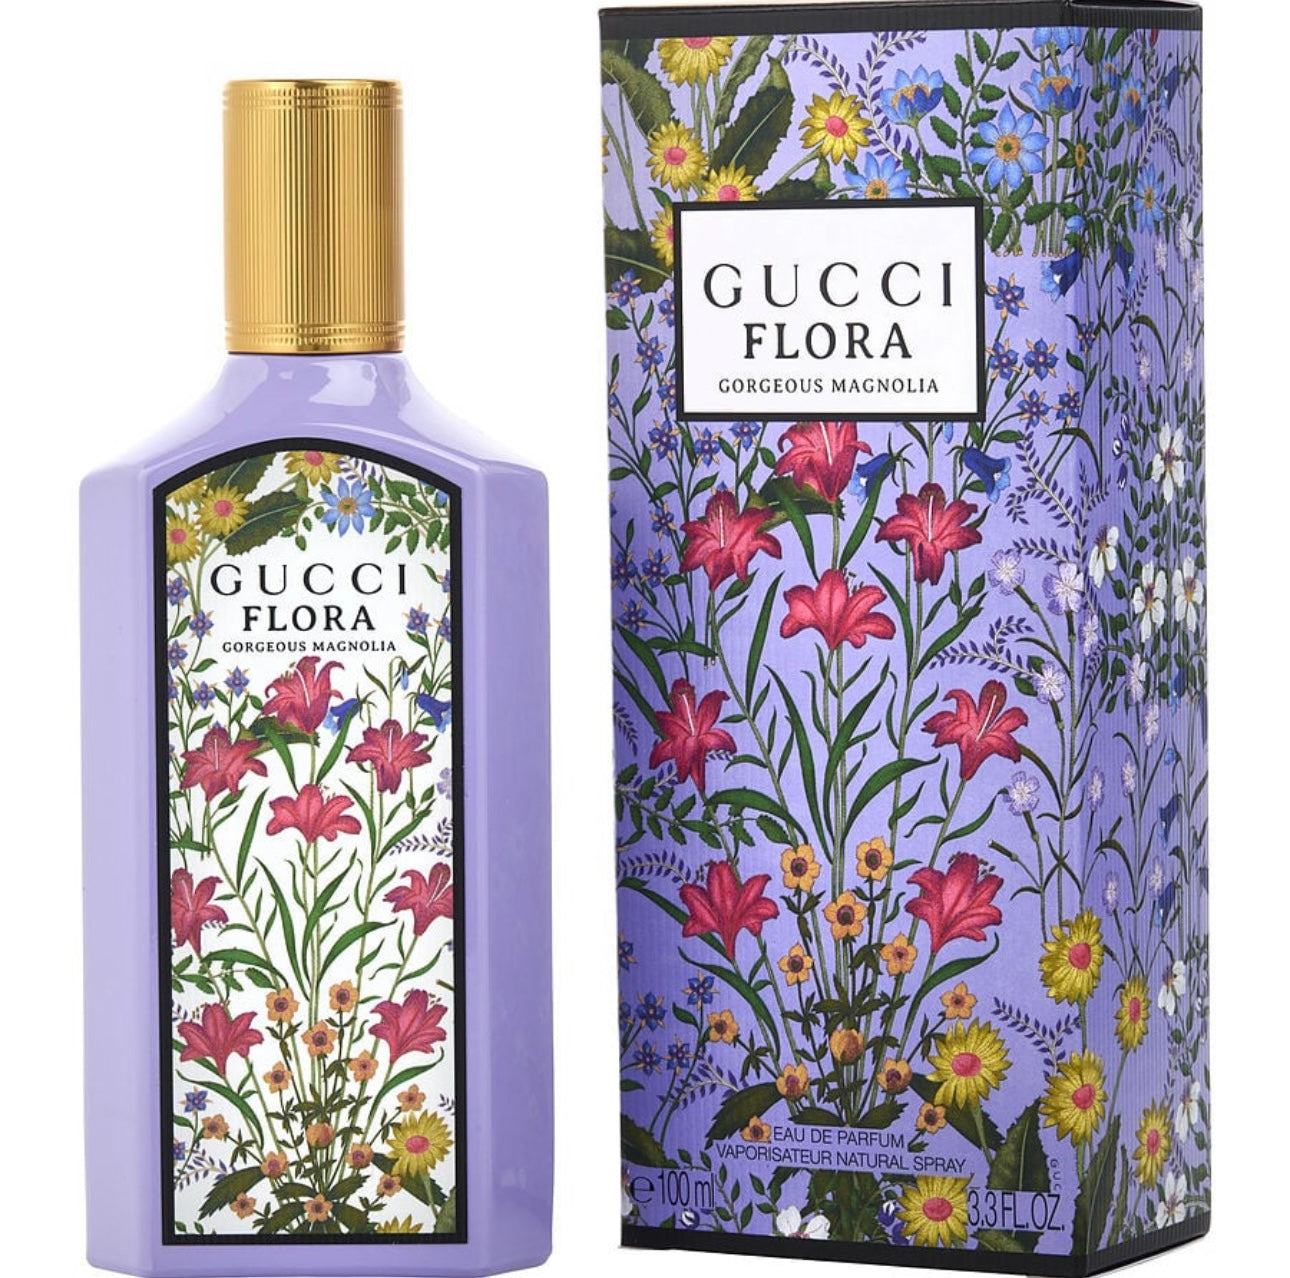 Gucci-Flora Gorgeous Magnolia-EdP